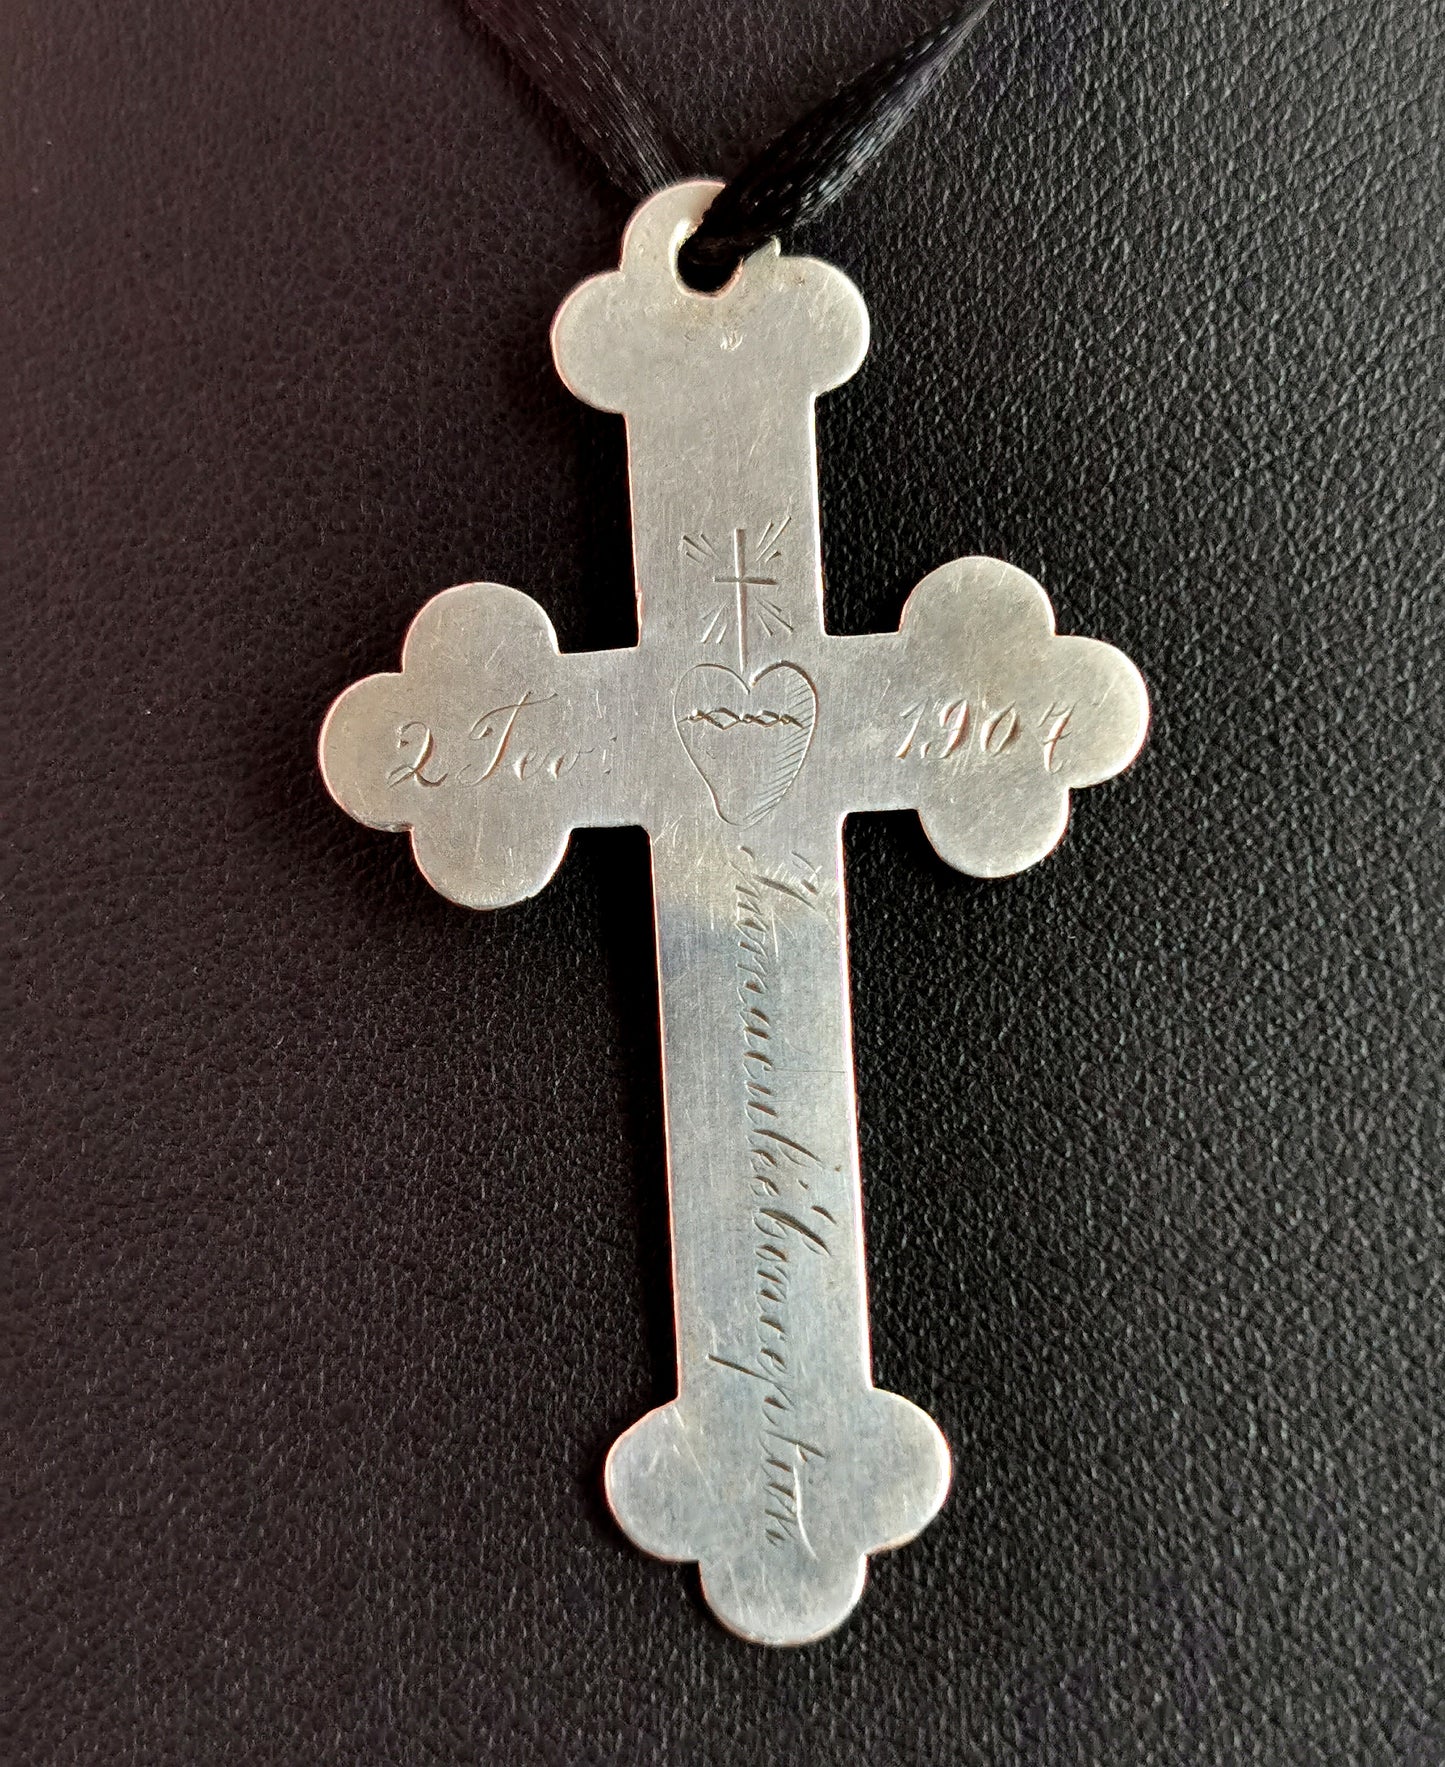 Antique silver cross pendant, heart and dagger